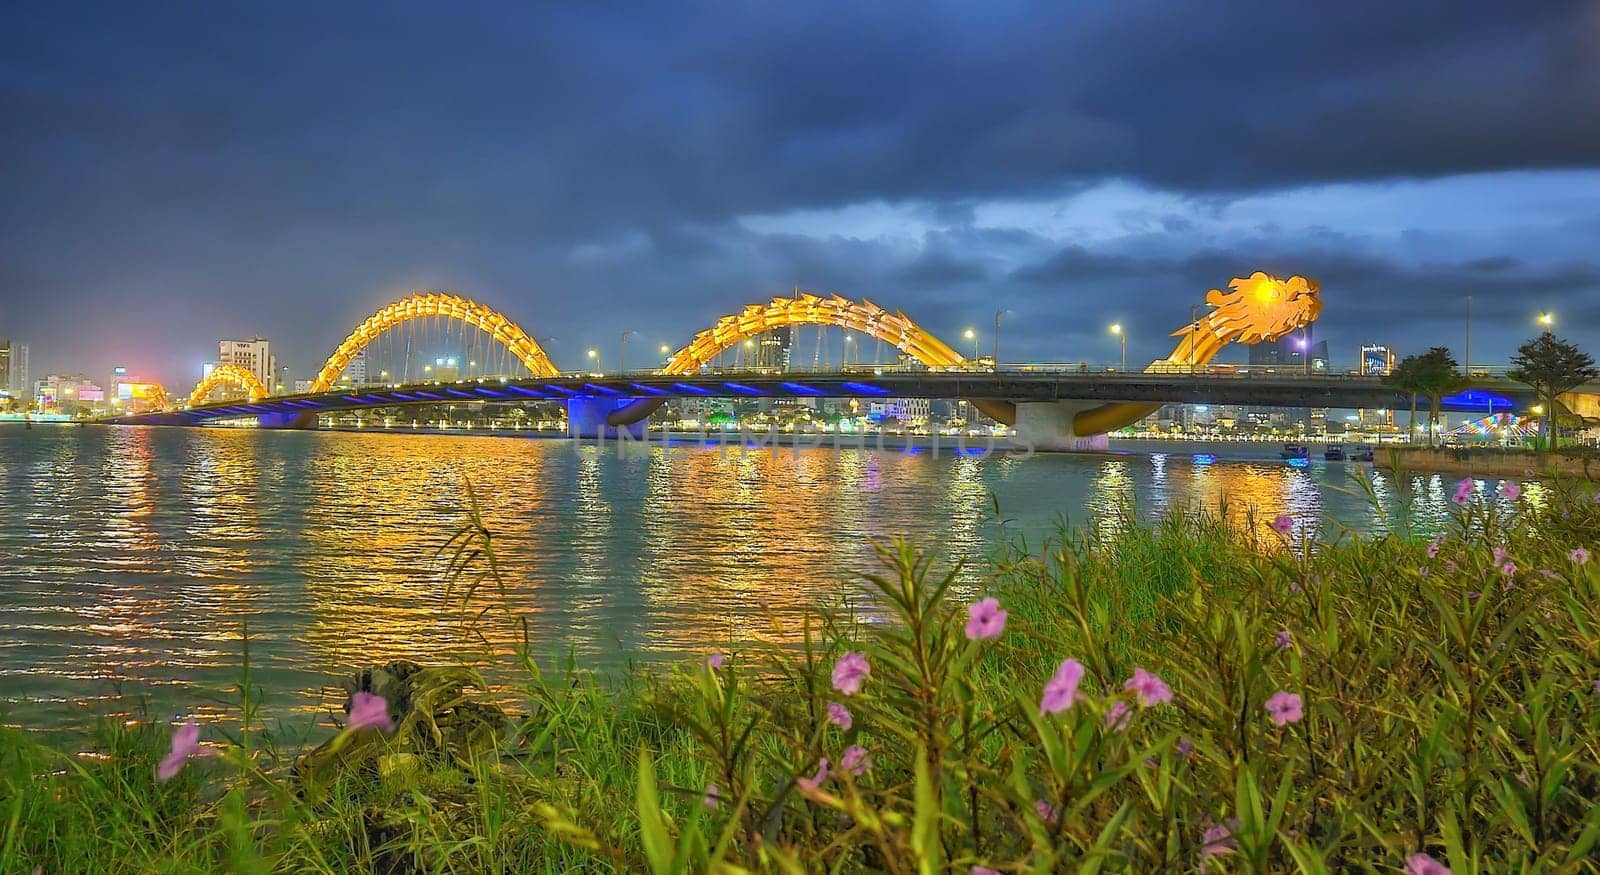 Famous colorful dragon bridge over river Han in Da Nang by night, Vietnam